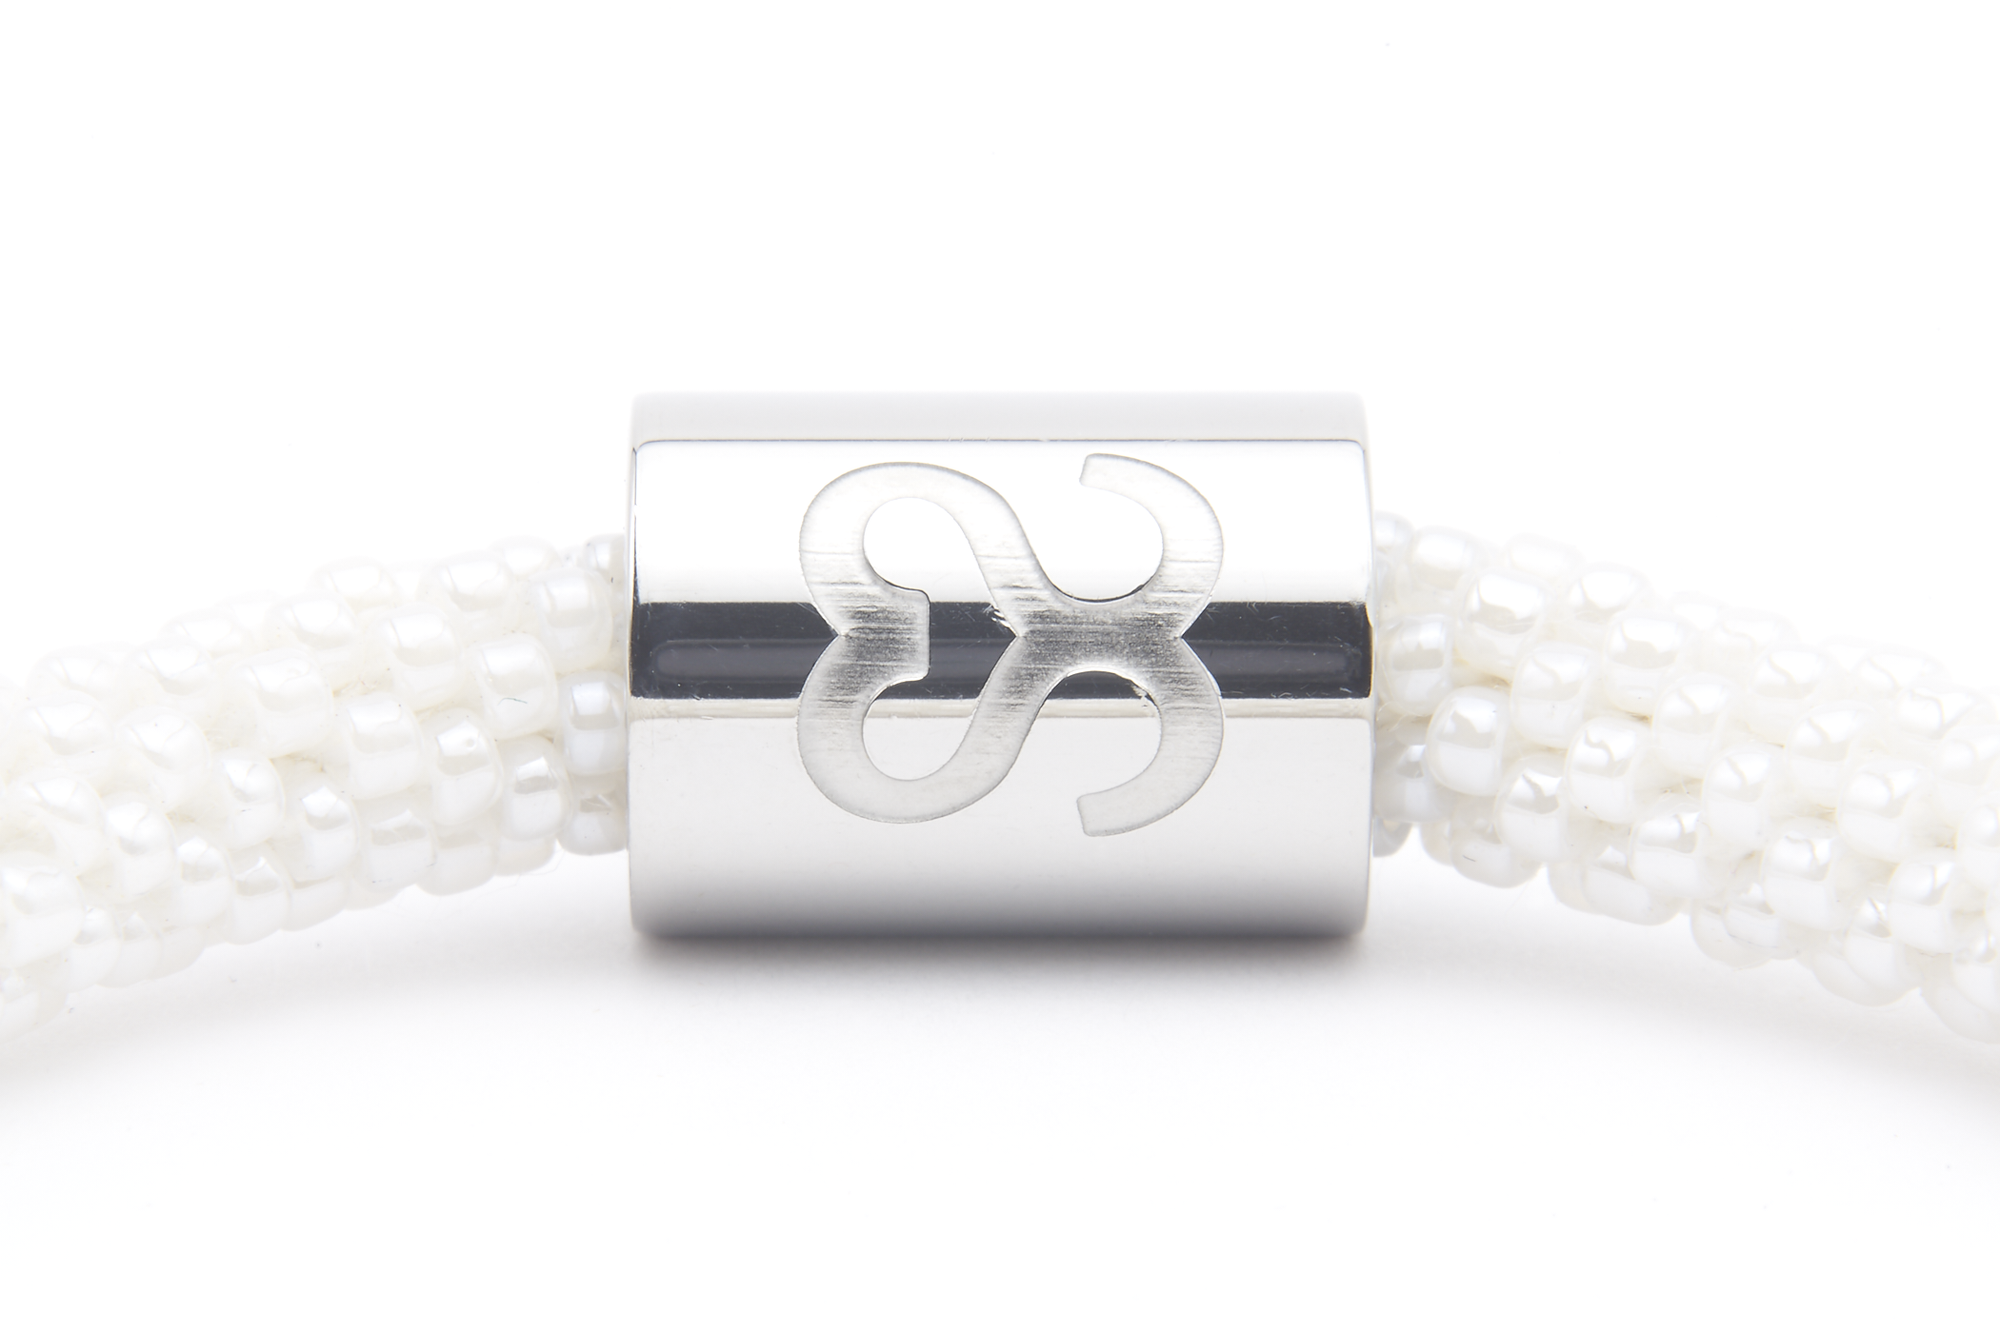 Sashka Co. Charm Bracelet White w/ Silver Balance Charm Balance Charm Bracelet - Extended 8"